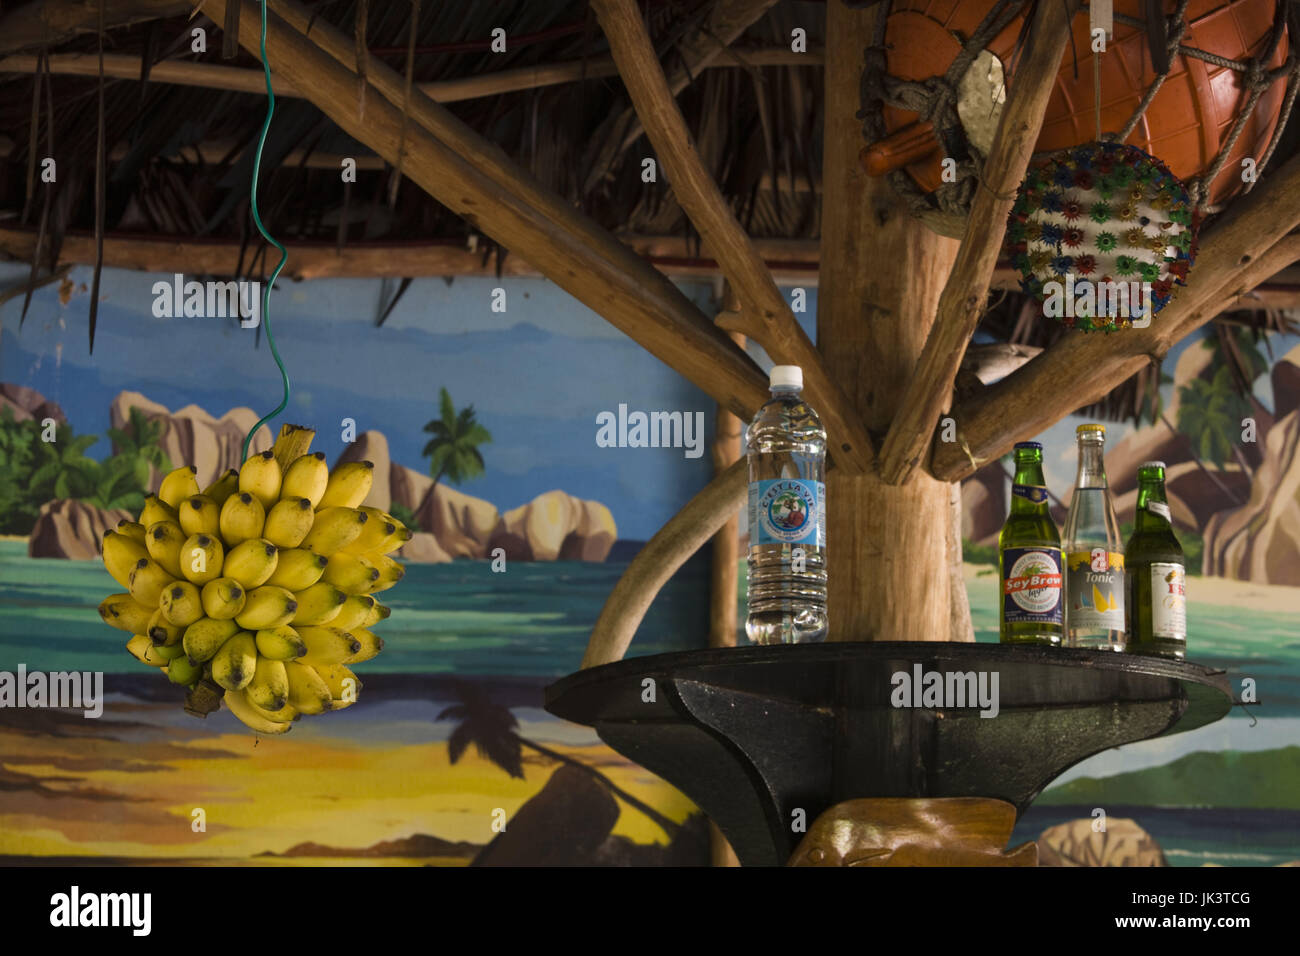 Seychelles, La Digue Island, Grand Anse, hanging bananas at Loutier Coco beach cafe Stock Photo